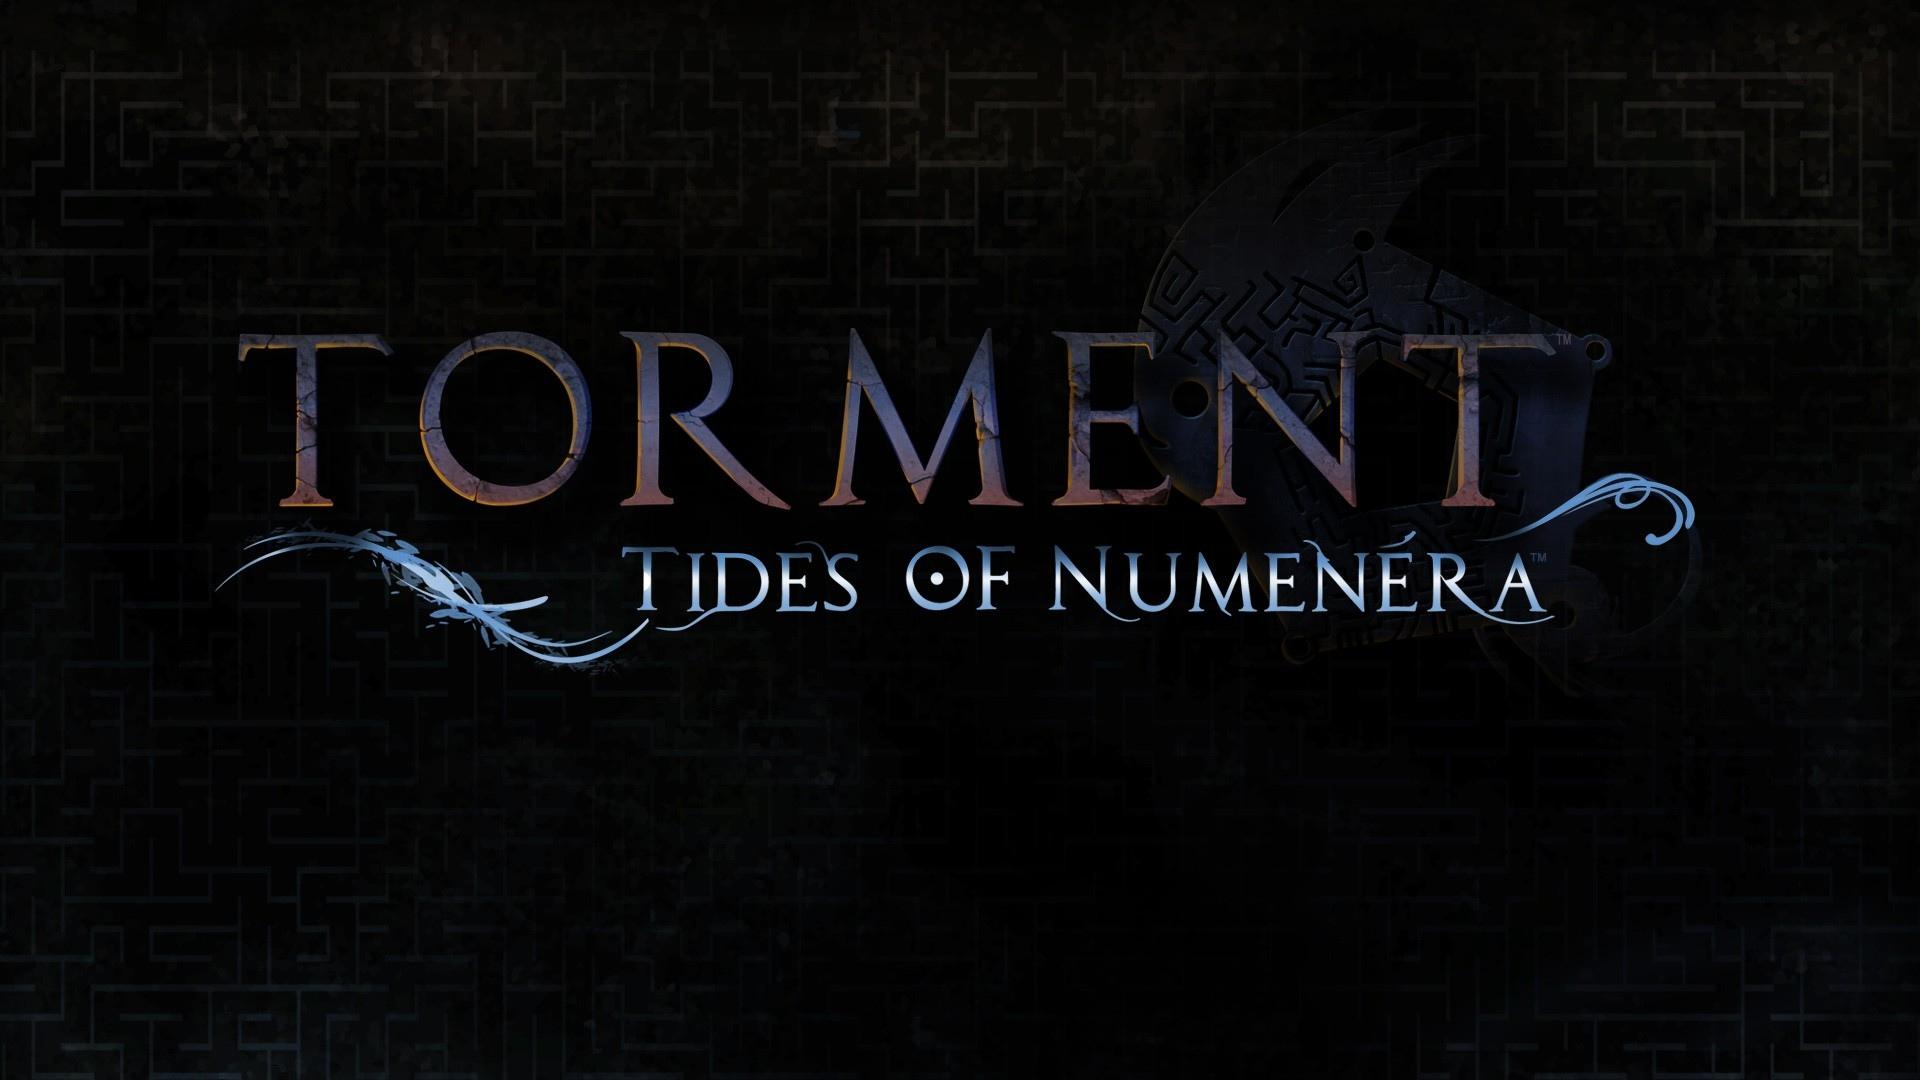 Torment Tides Of Numenera at 1024 x 1024 iPad size wallpapers HD quality